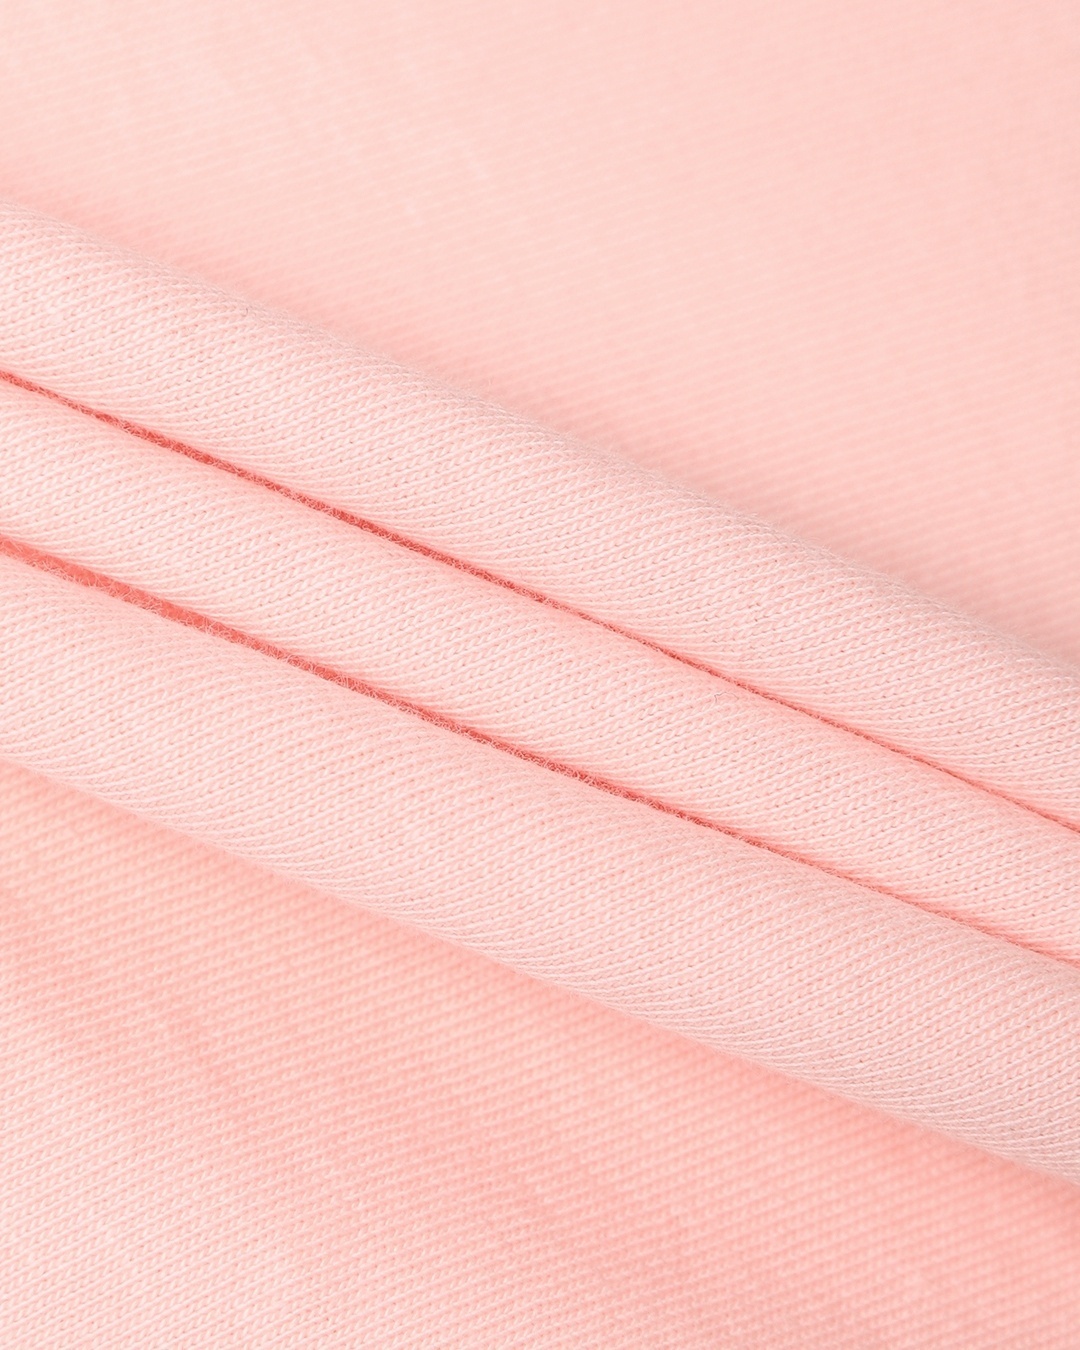 Shop Seashell Pink Round Neck 3/4 Sleeve T-Shirts